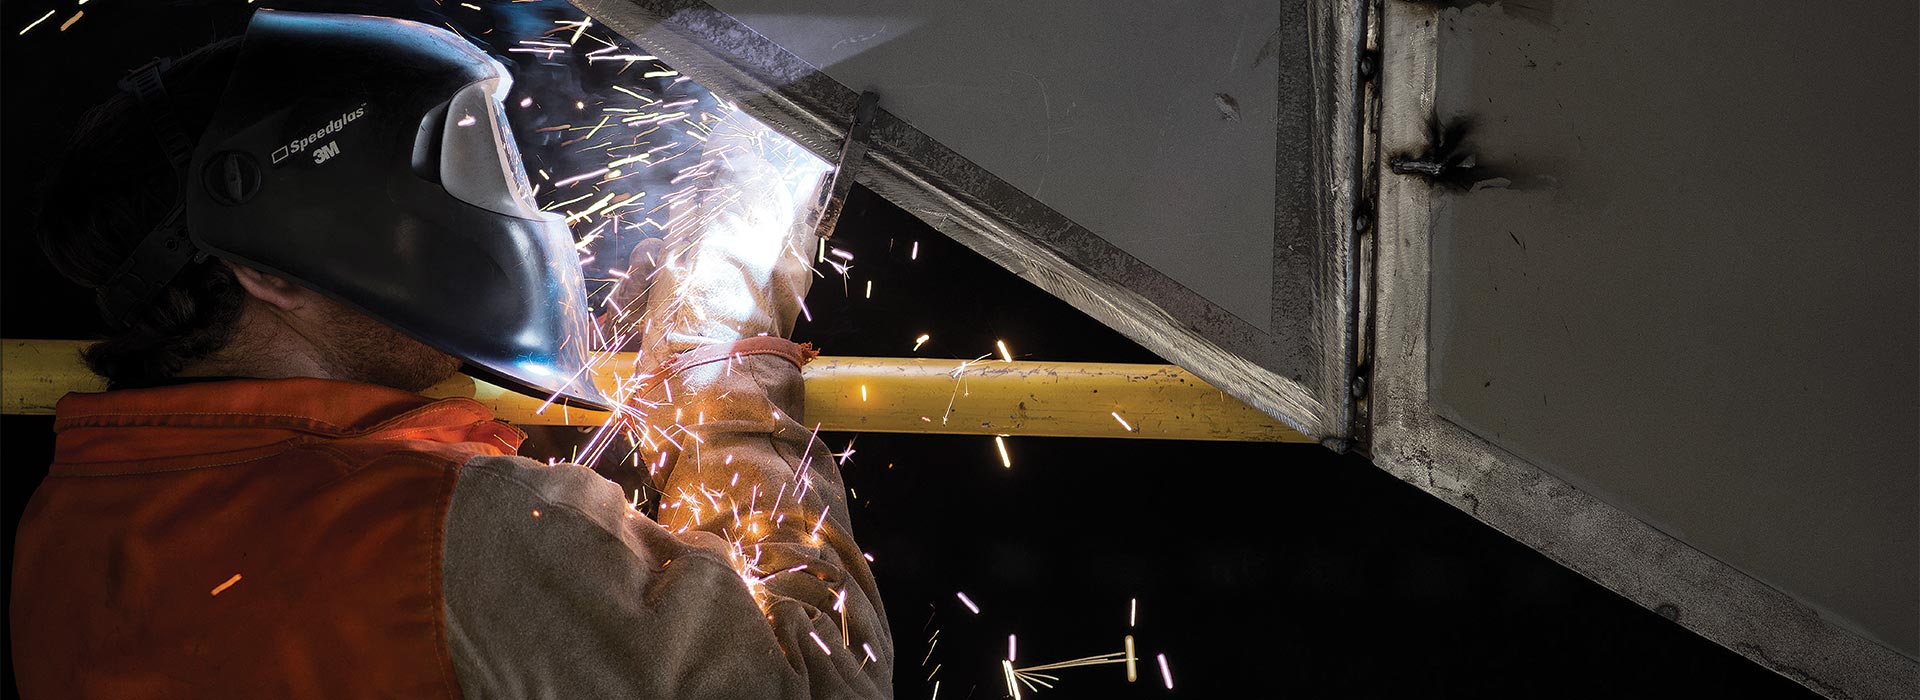 Defence Career options - skilled welder working on a steel component